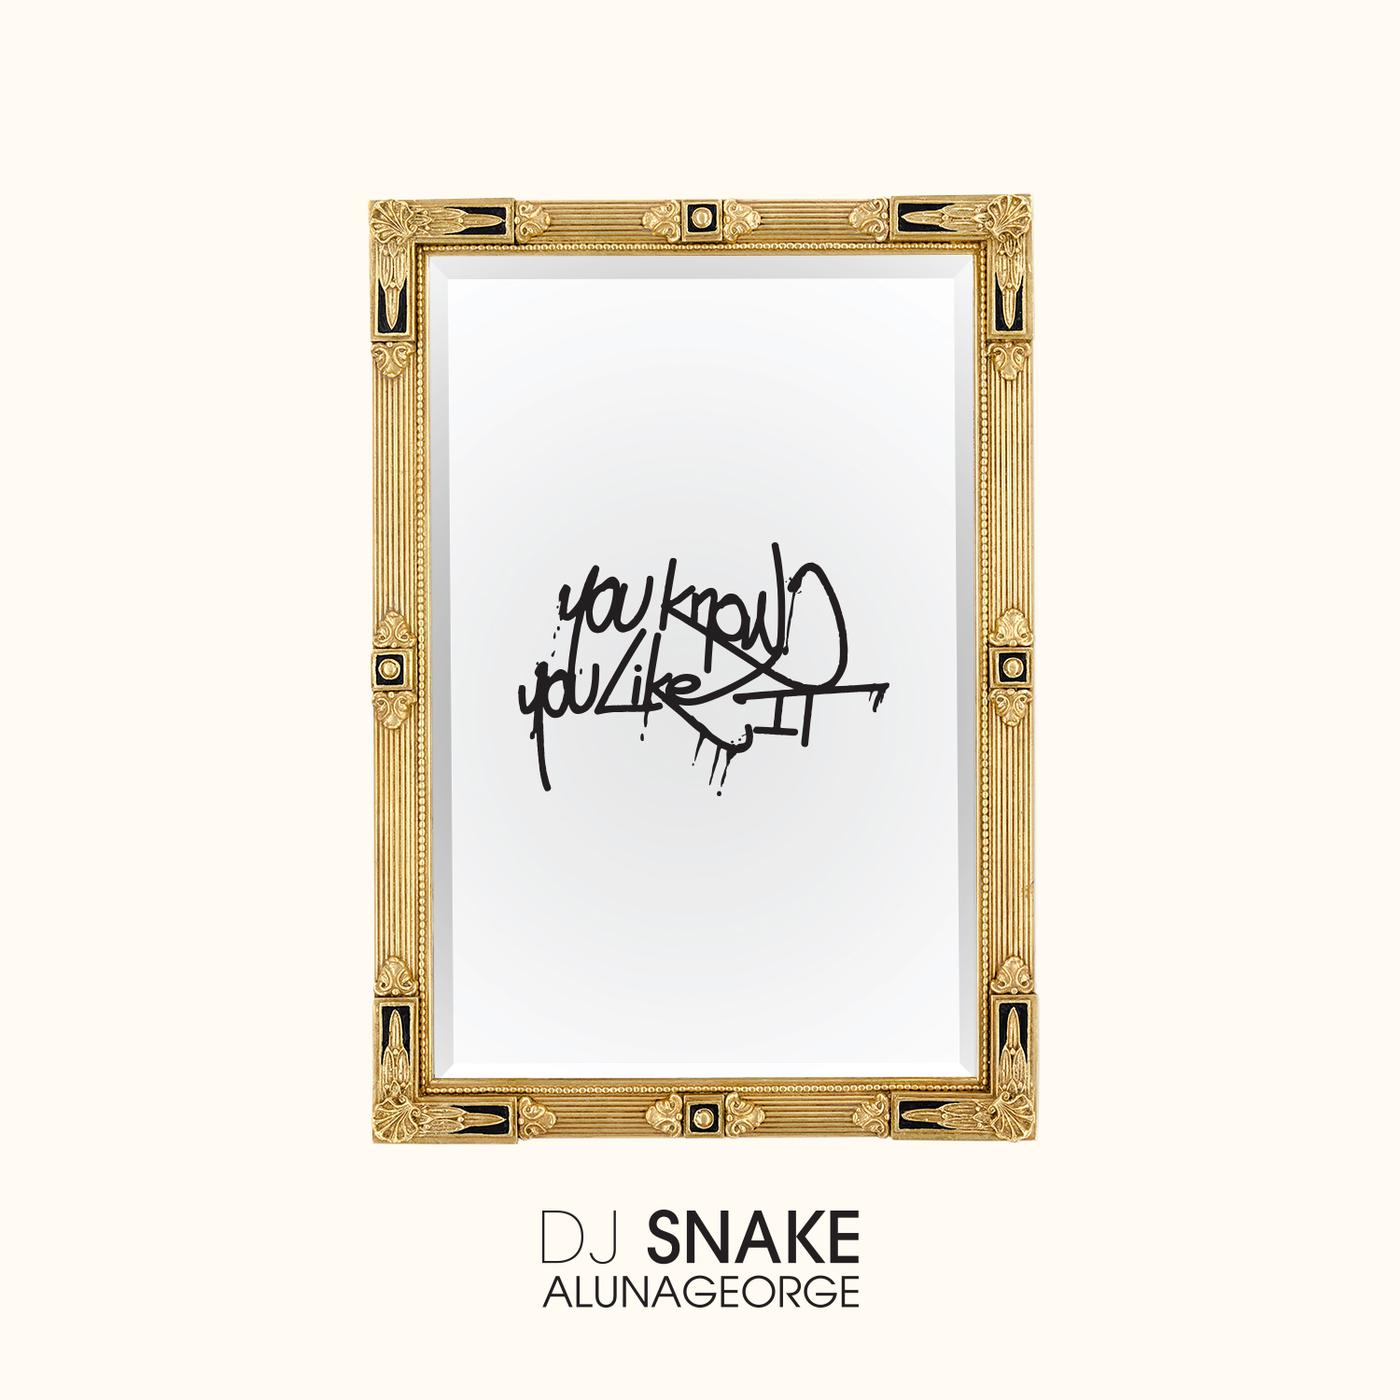 Alunageorge know like dj. DJ Snake ALUNAGEORGE. You know you like it. DJ Snake you know you like it. DJ Snake ALUNAGEORGE you.